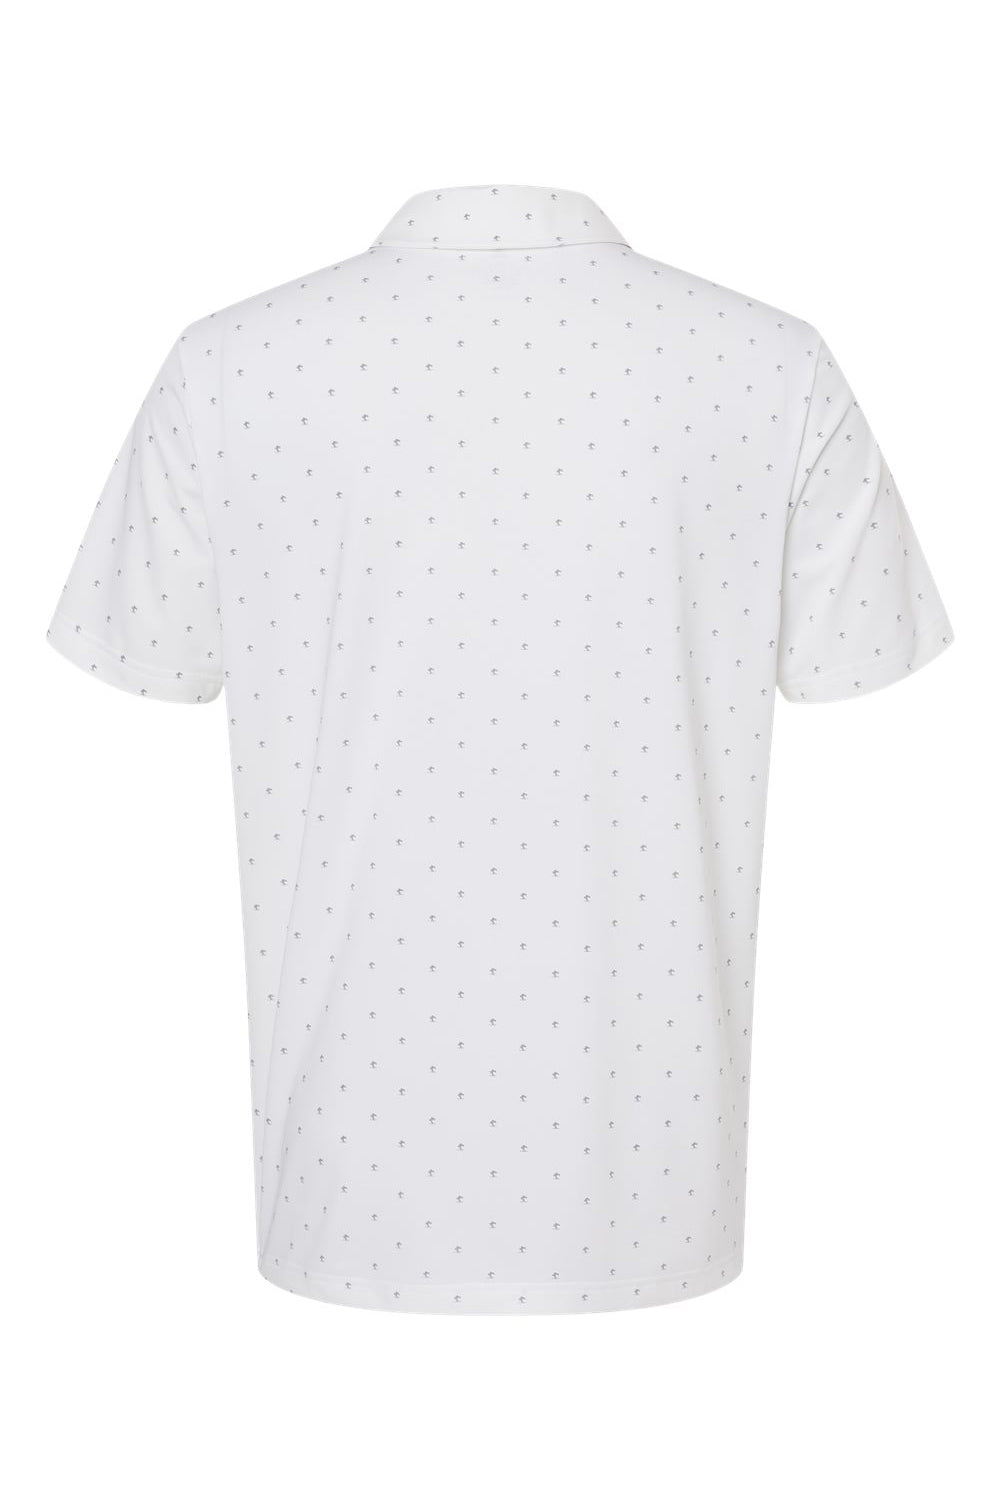 Adidas A574 Mens Pine Tree Moisture Wicking Short Sleeve Polo Shirt White/Grey Flat Back